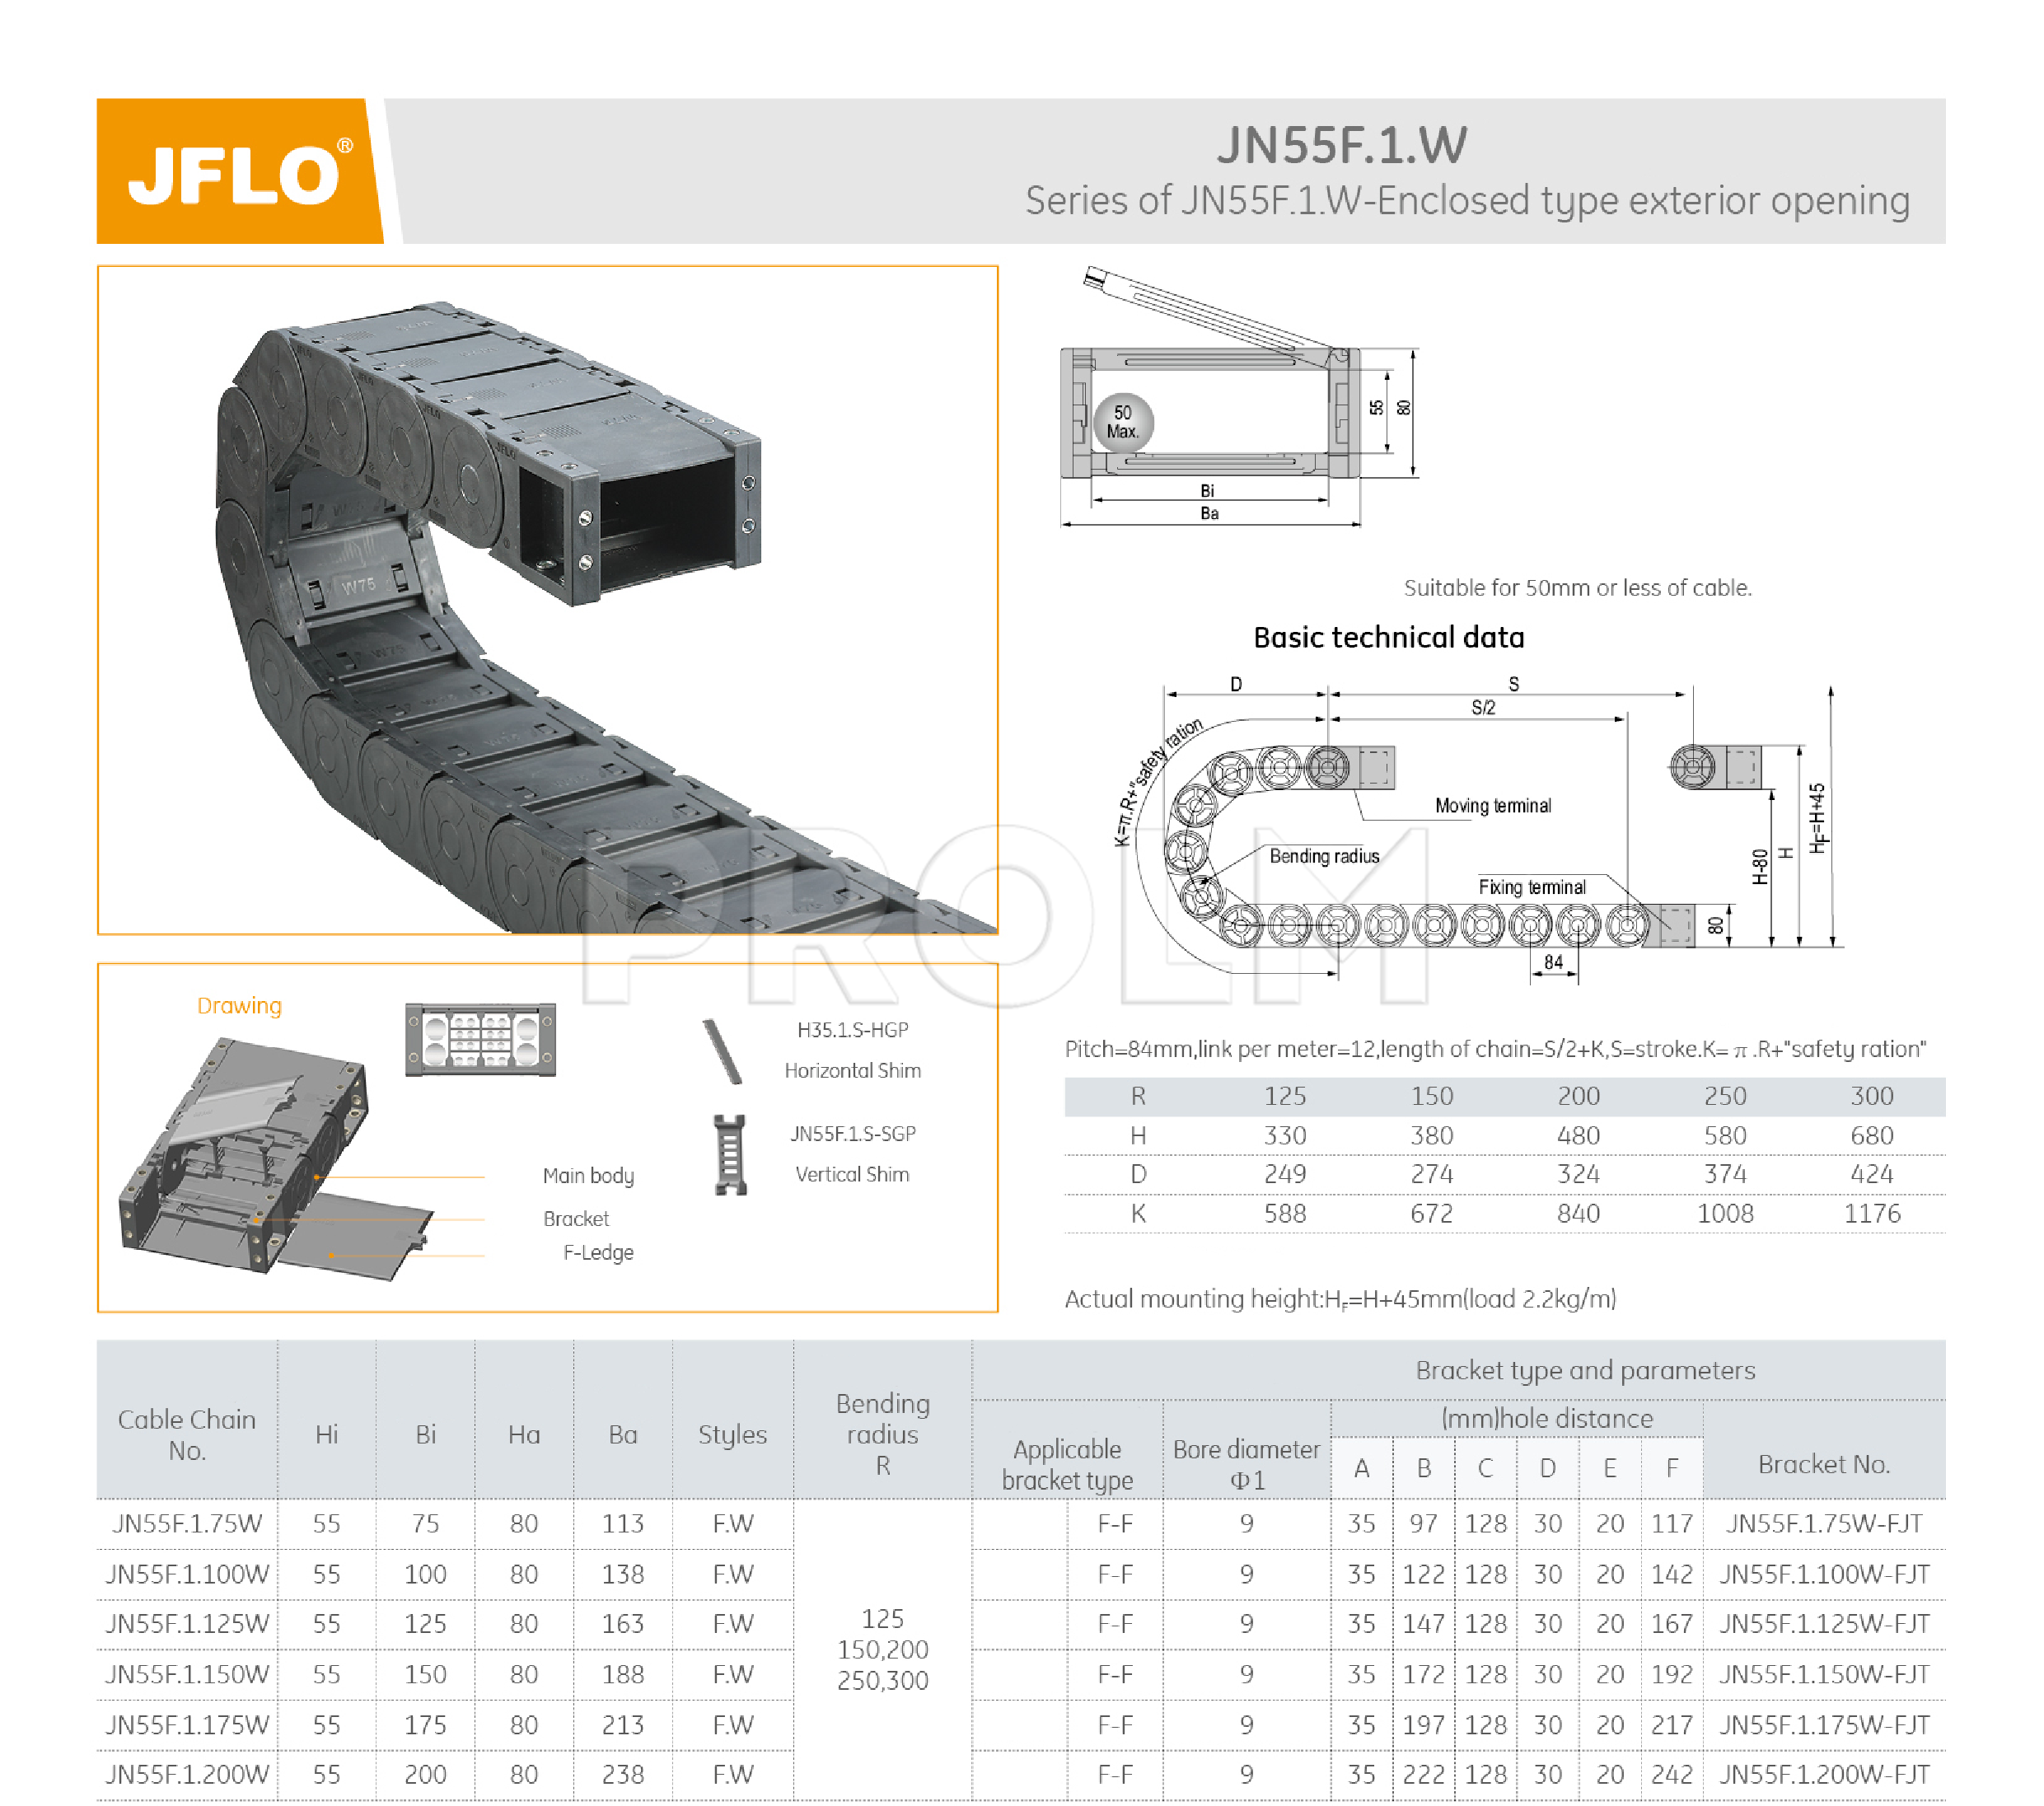 Гибкий кабель-канал  JFLO JN55F.1.200W200 (55x200;R=200, enclosed type exterior opening)